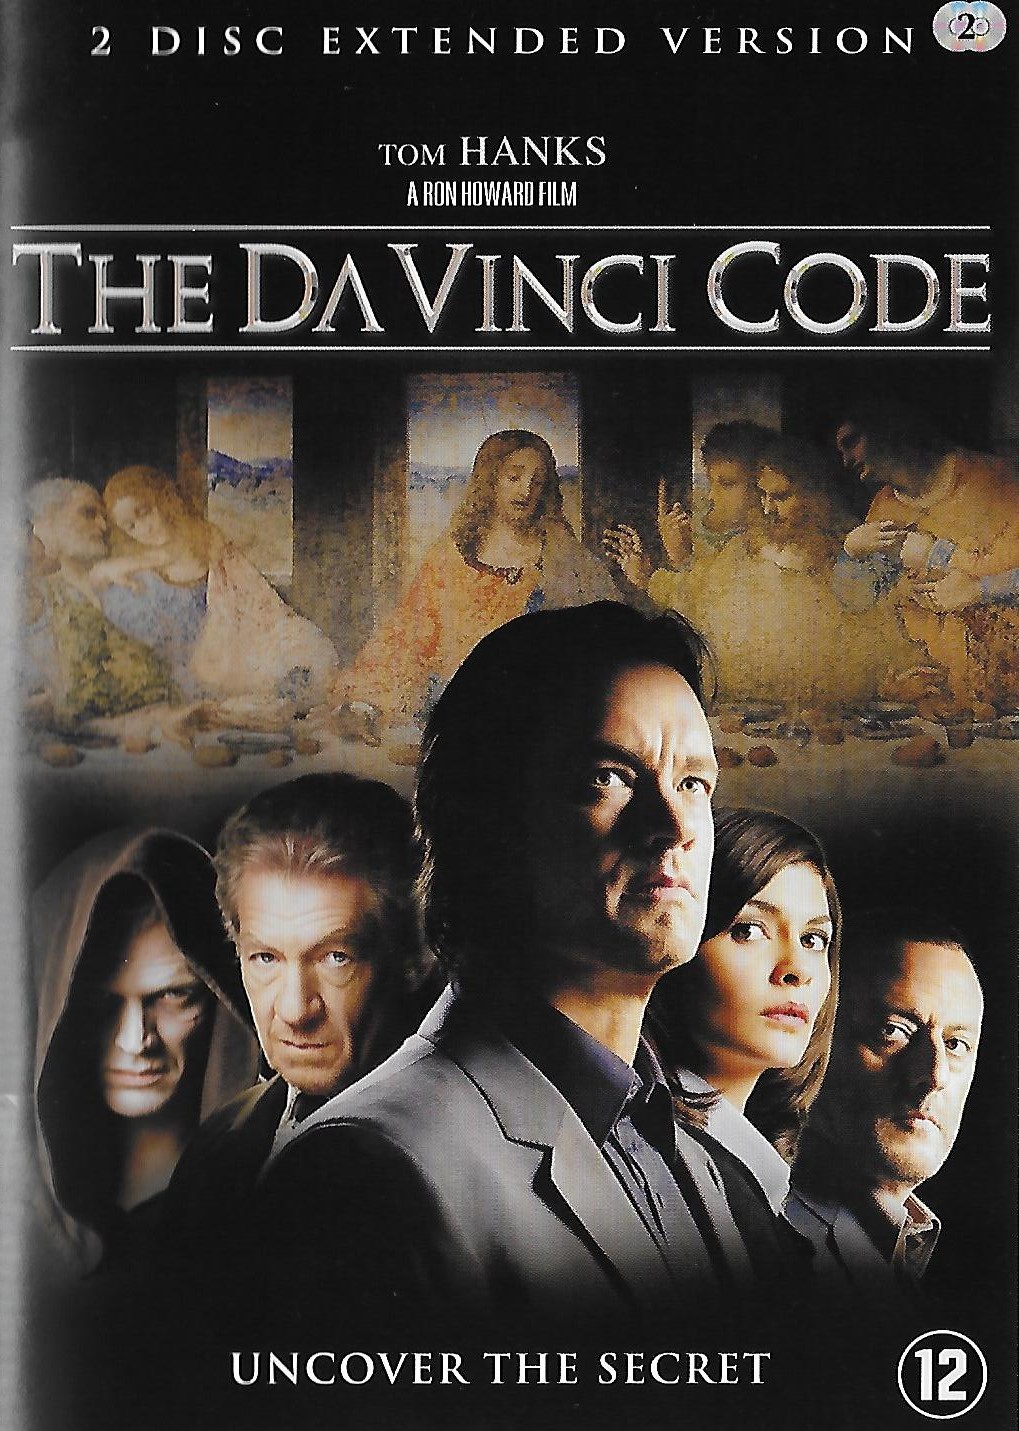 The Da Vinci Code 2006 Extended dual audio 5.1